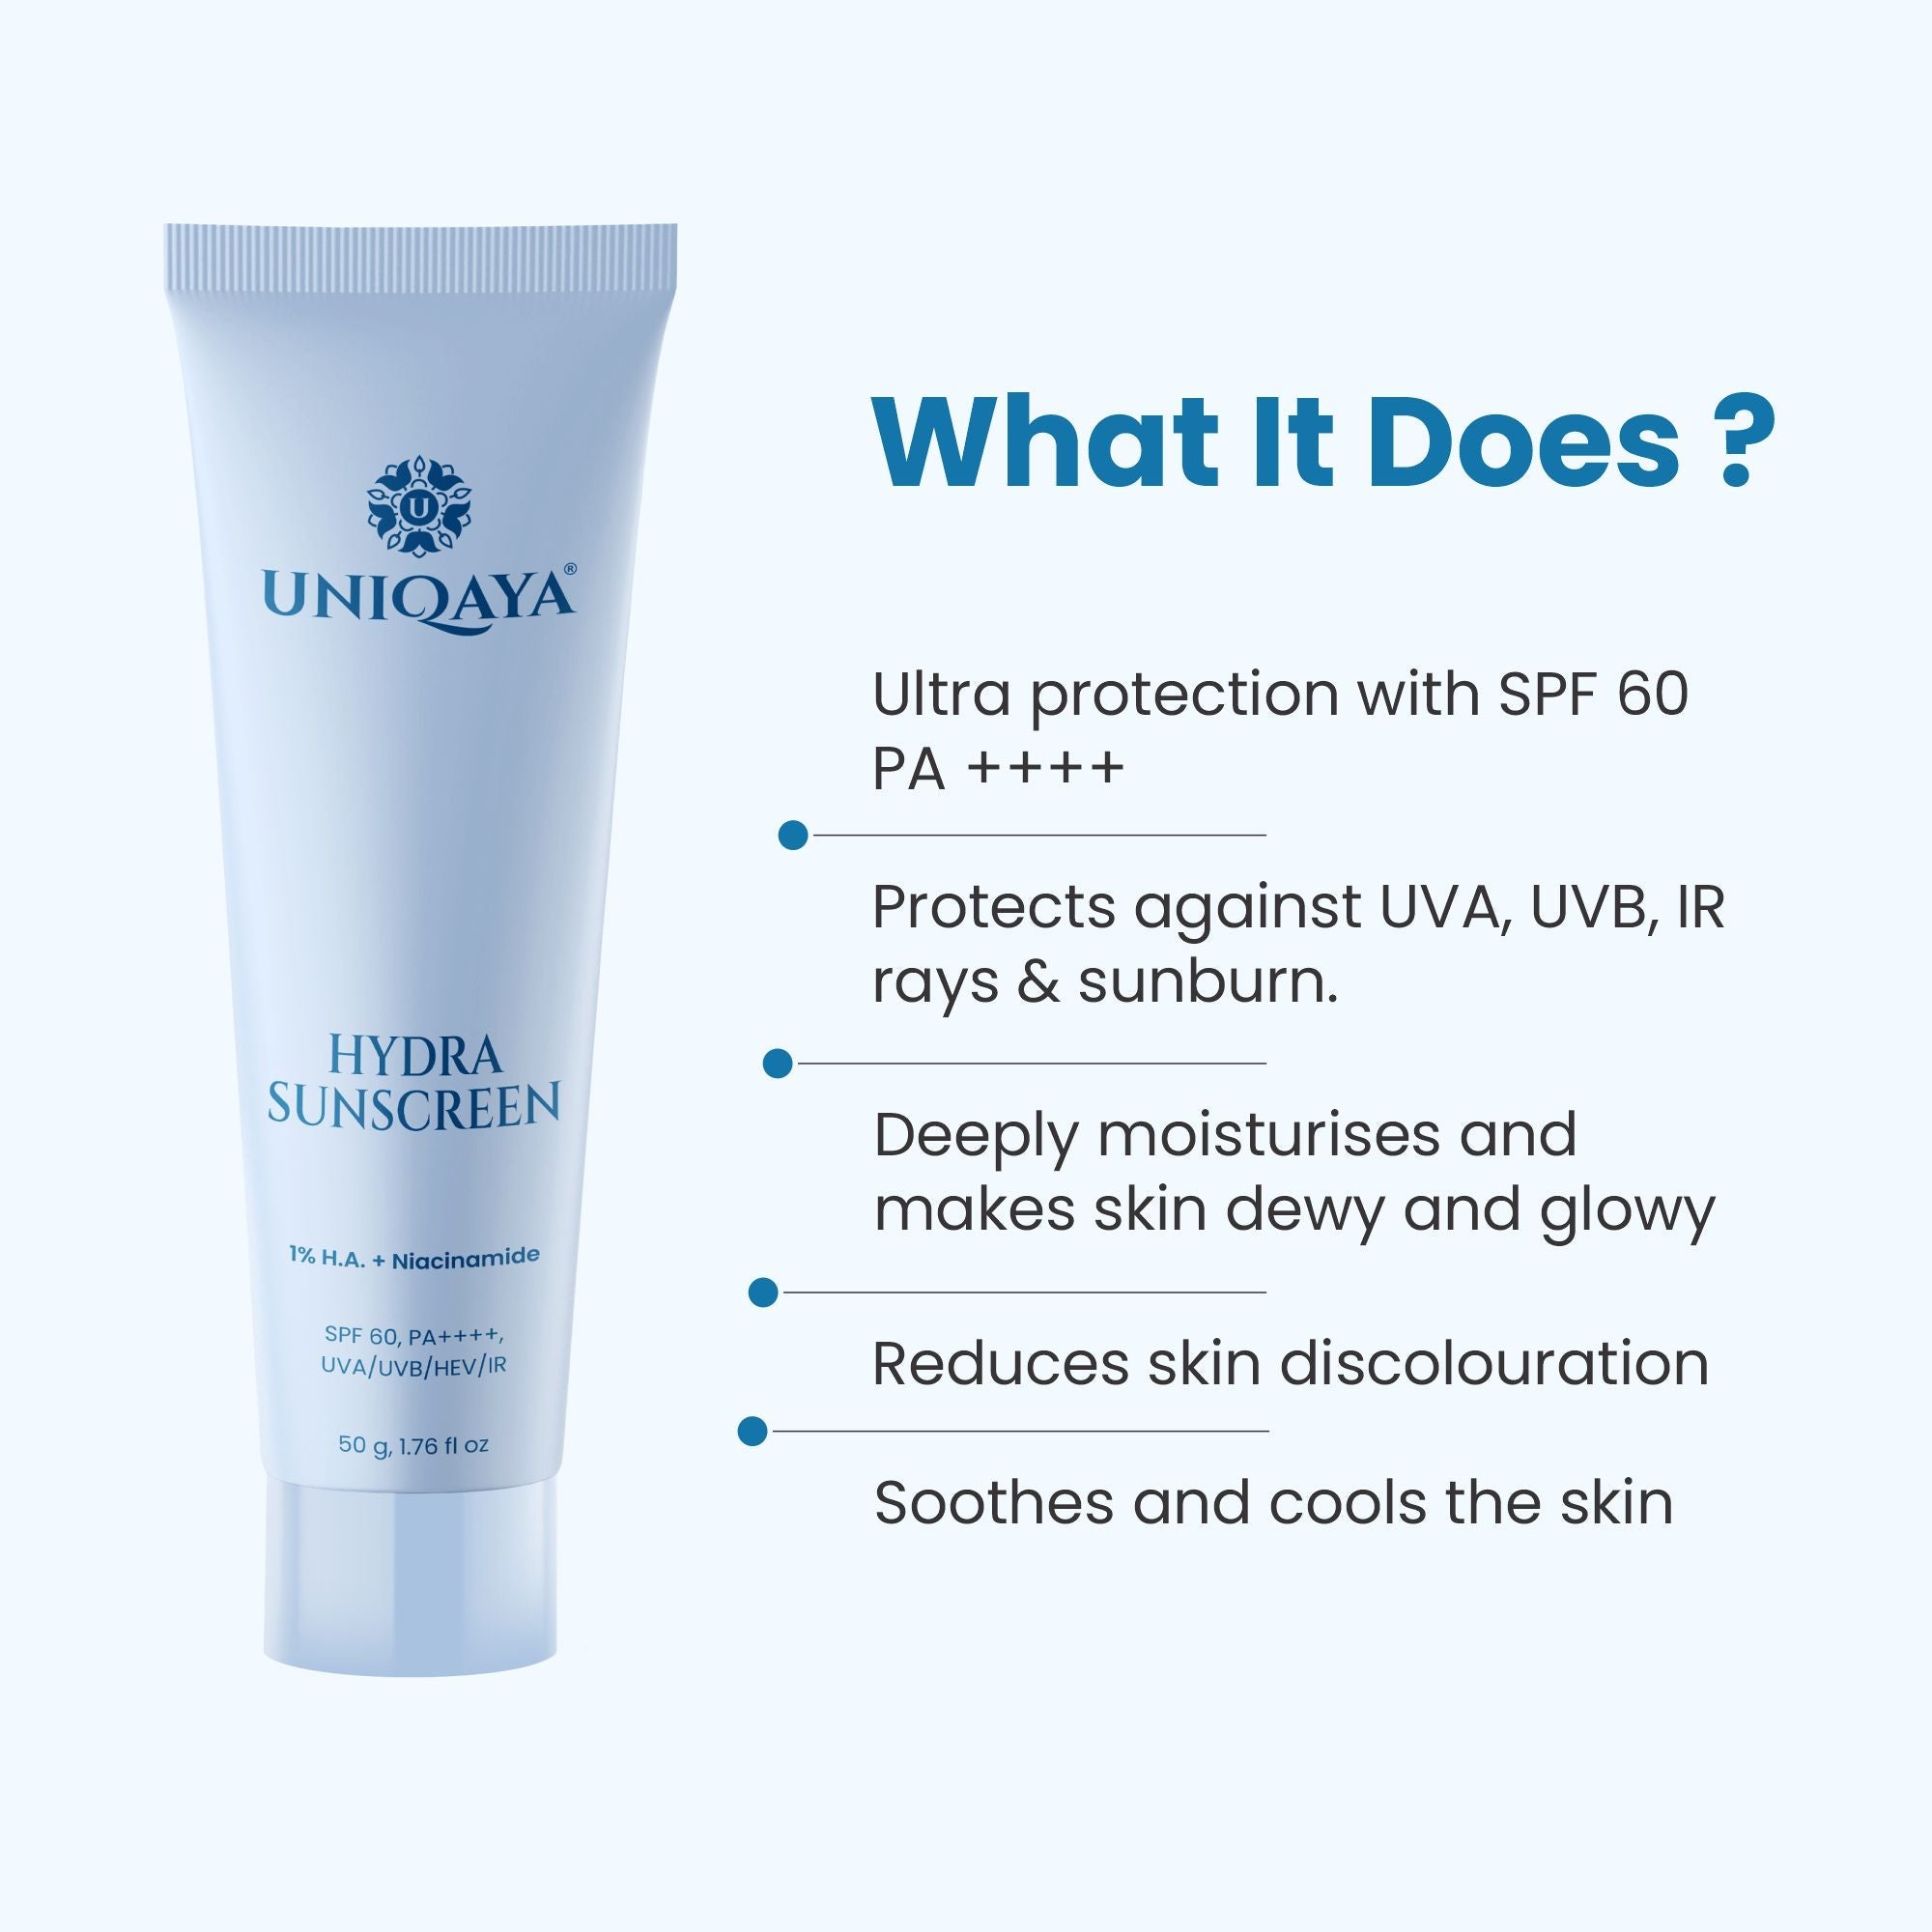 Uniqaya Hydra Sunscreen What it Does?